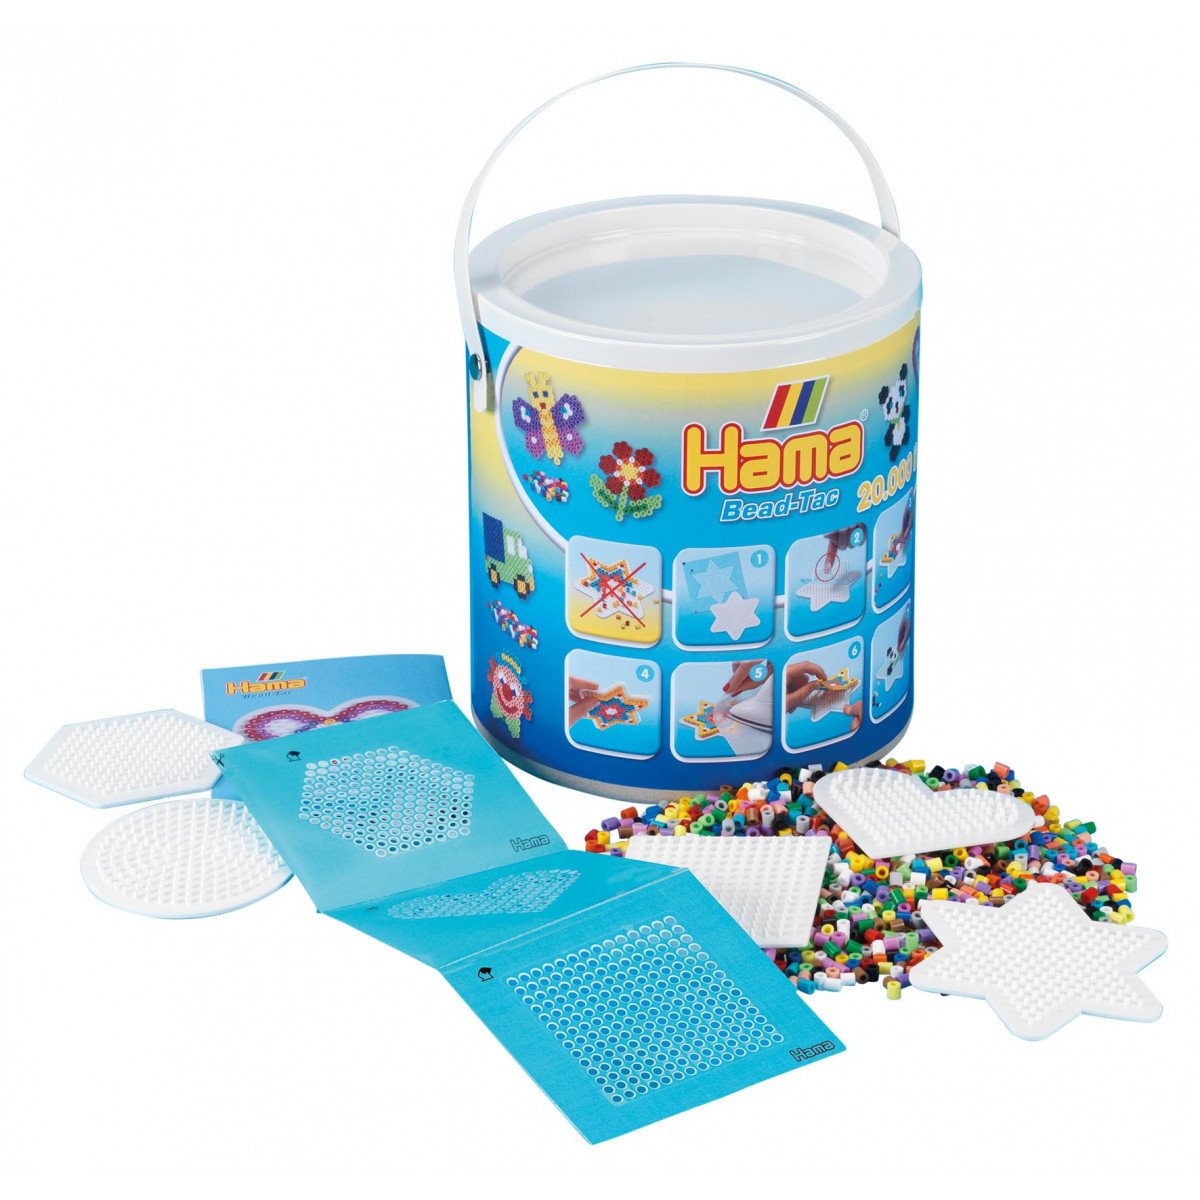 Hama Beads - midi beads with plates in box (387701)